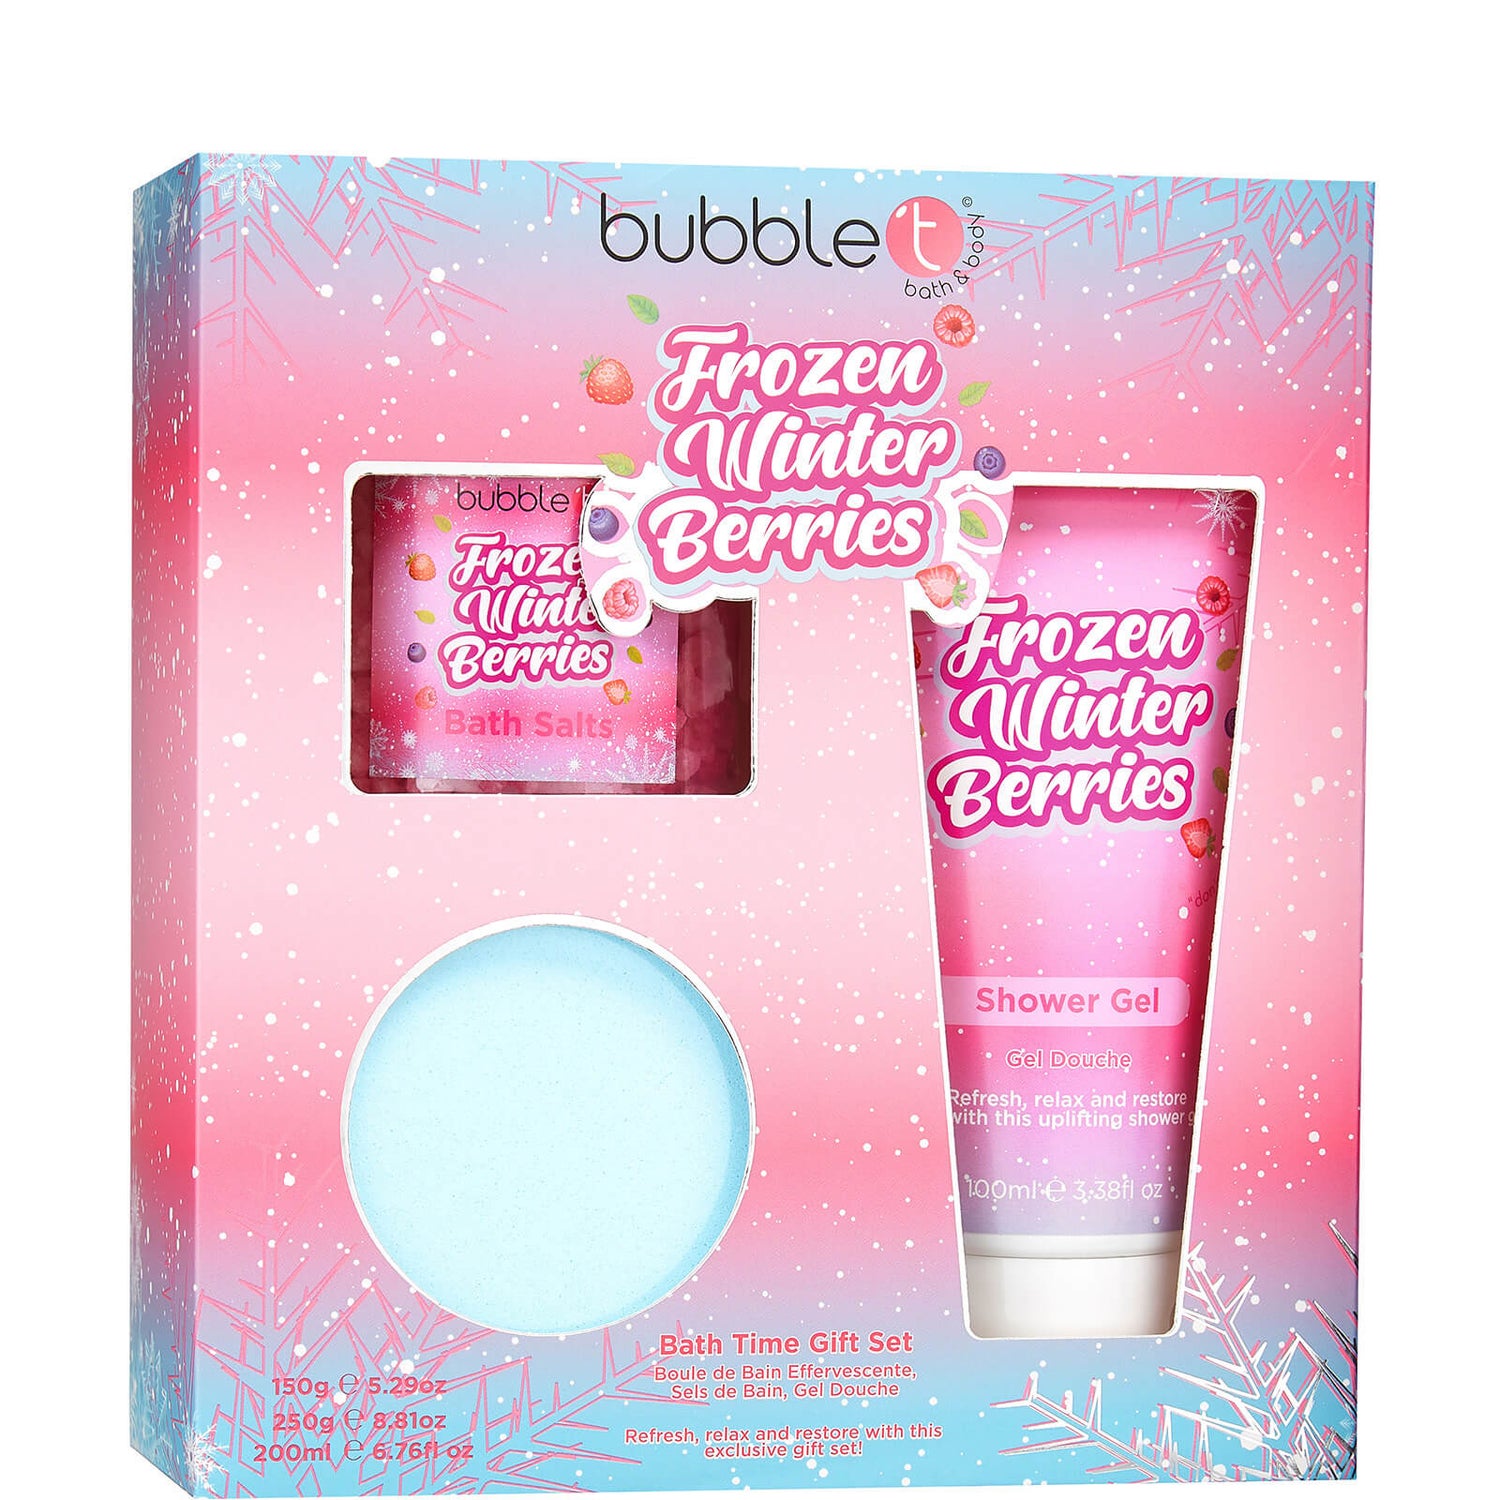 Selection Box Frozen Winter Berries Bubble T Cosmetics